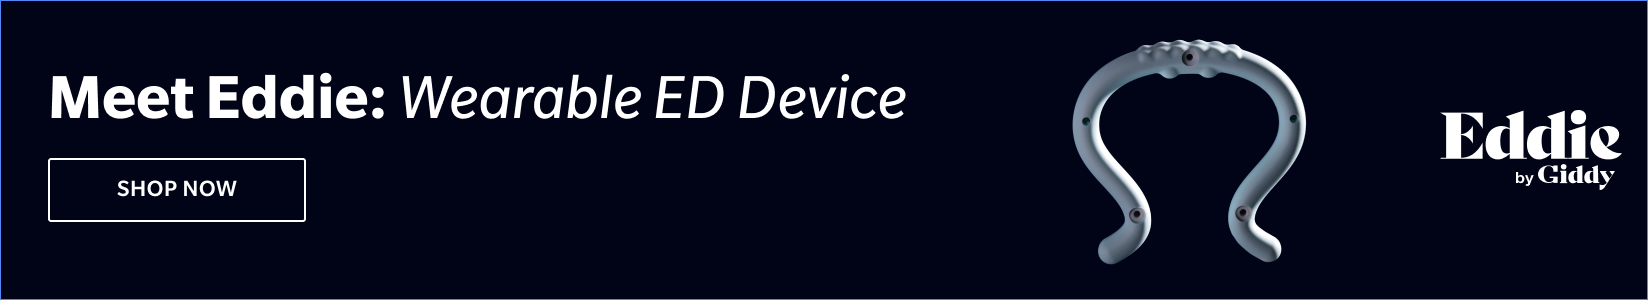 meet eddie wearable ed device - banner